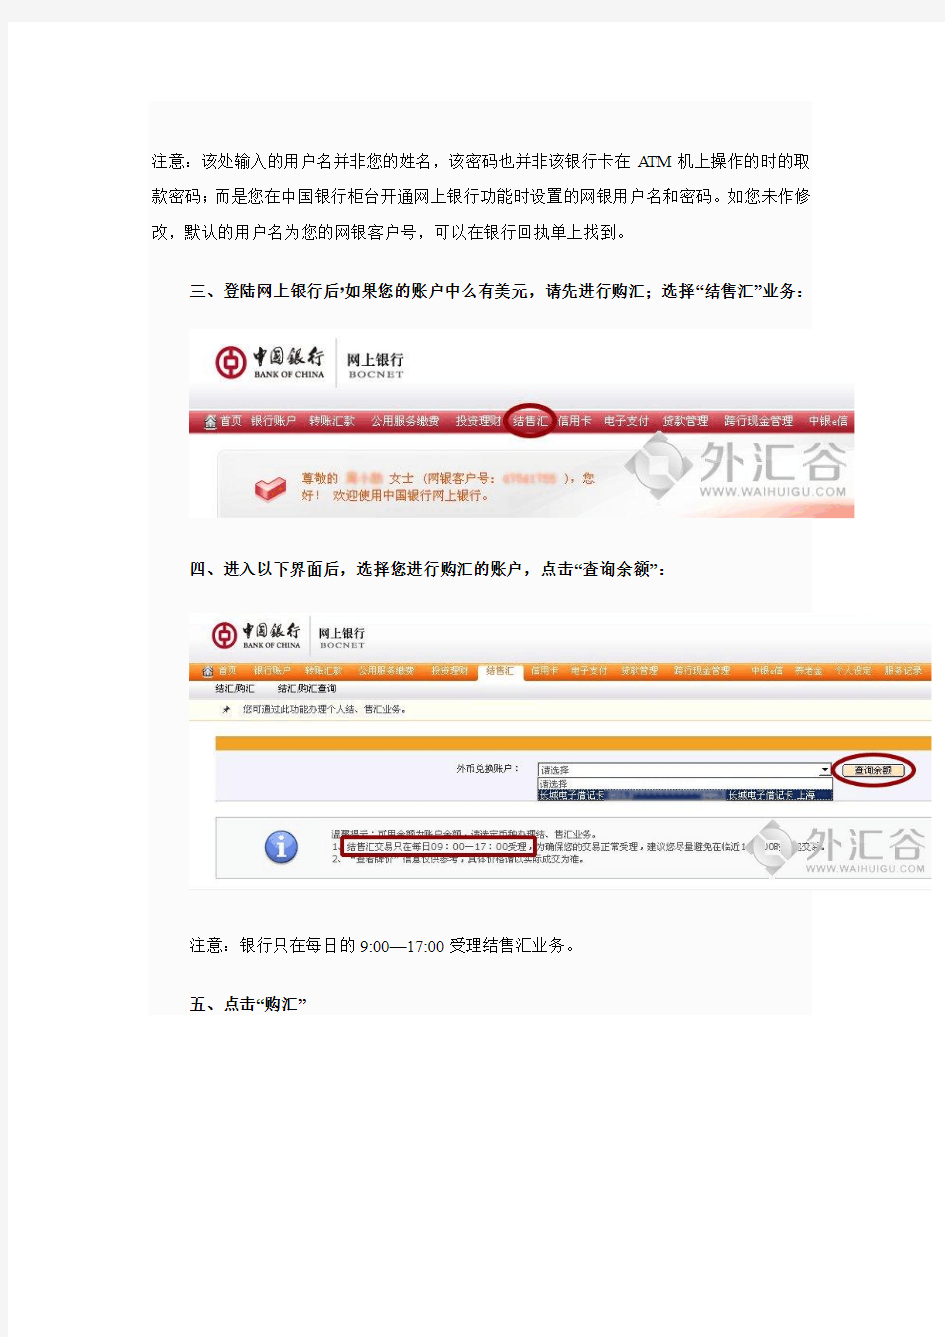 GKFX中国银行网银支付流程